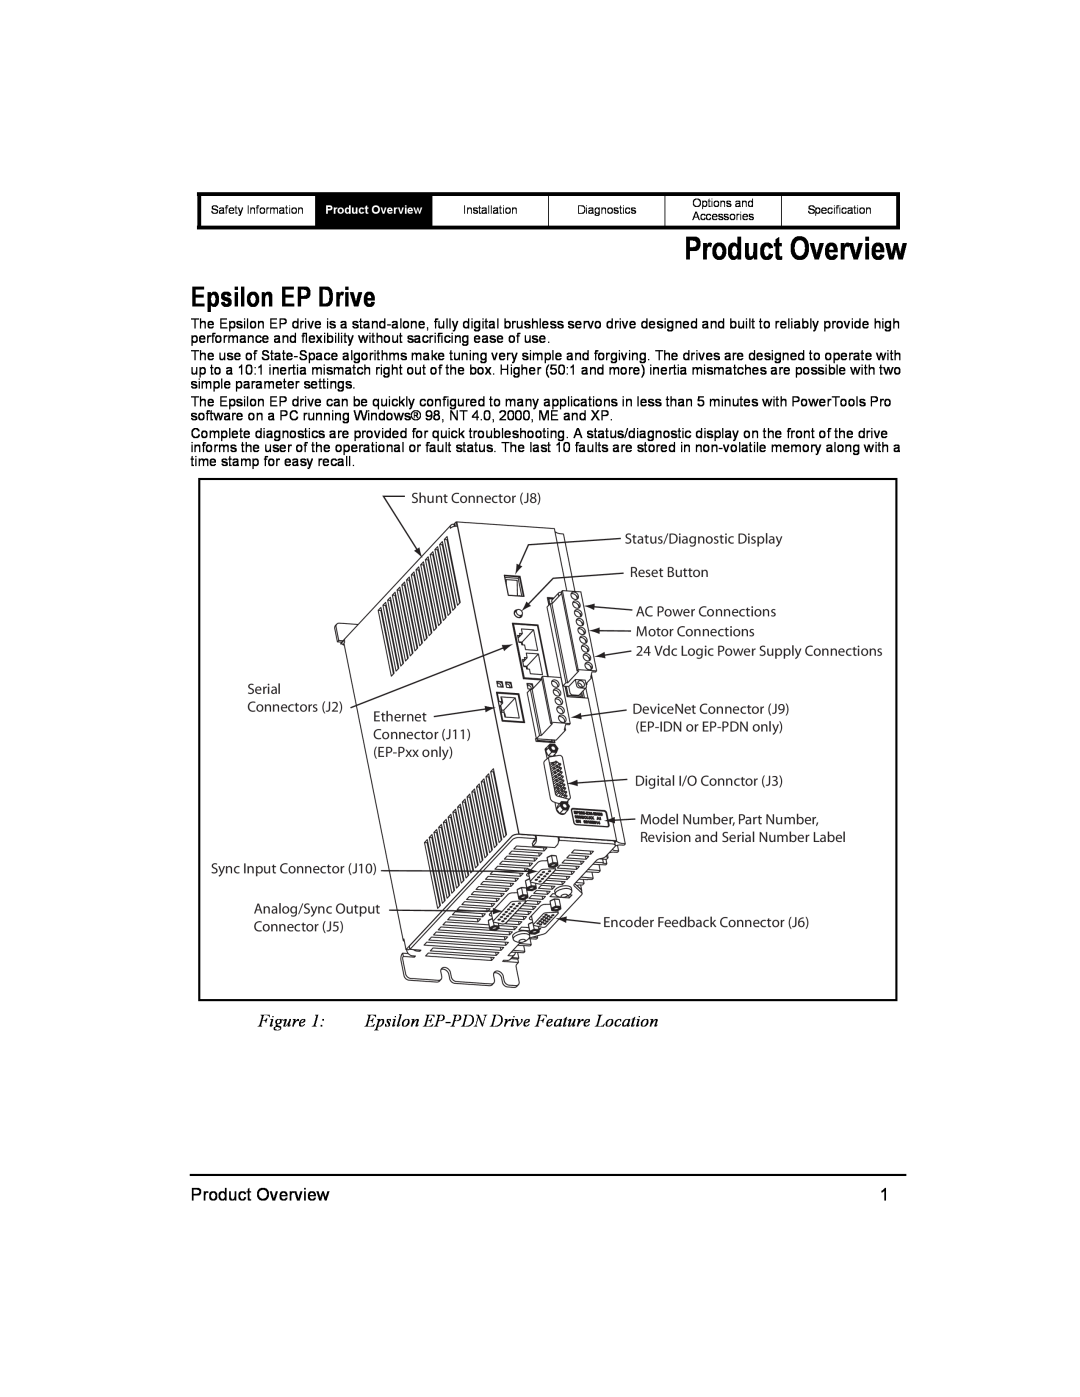 Emerson 400518-01 installation manual Product Overview, Epsilon EP Drive, Epsilon EP-PDN Drive Feature Location 